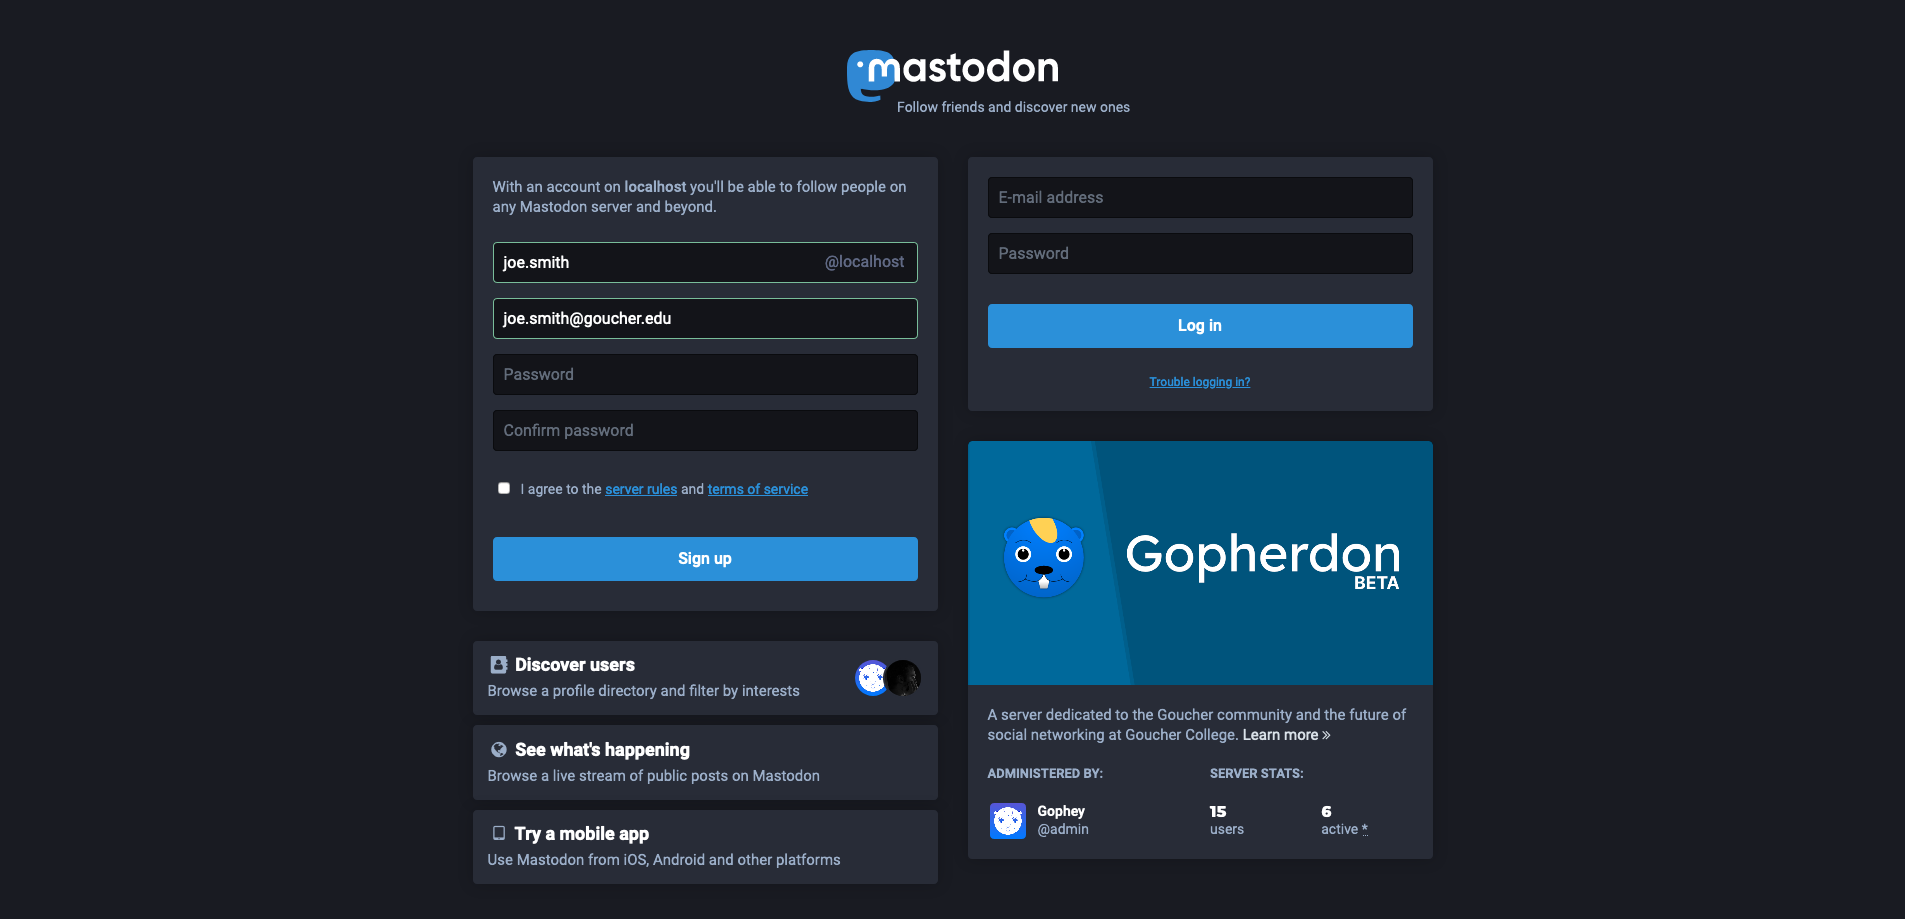 Mastodon's registration page